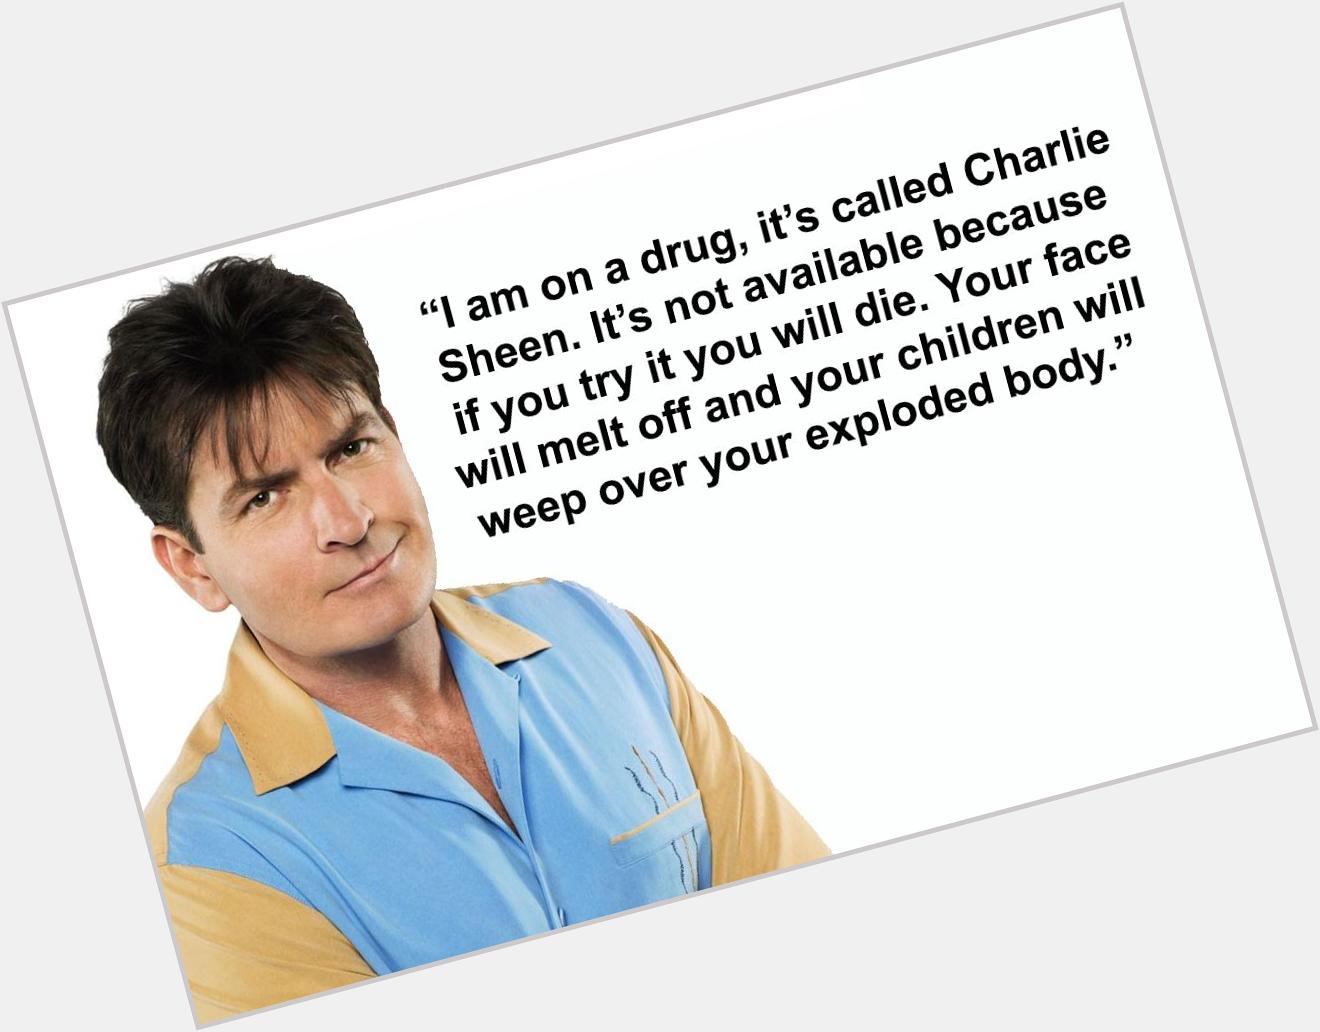 Happy birthday, Charlie Sheen! 